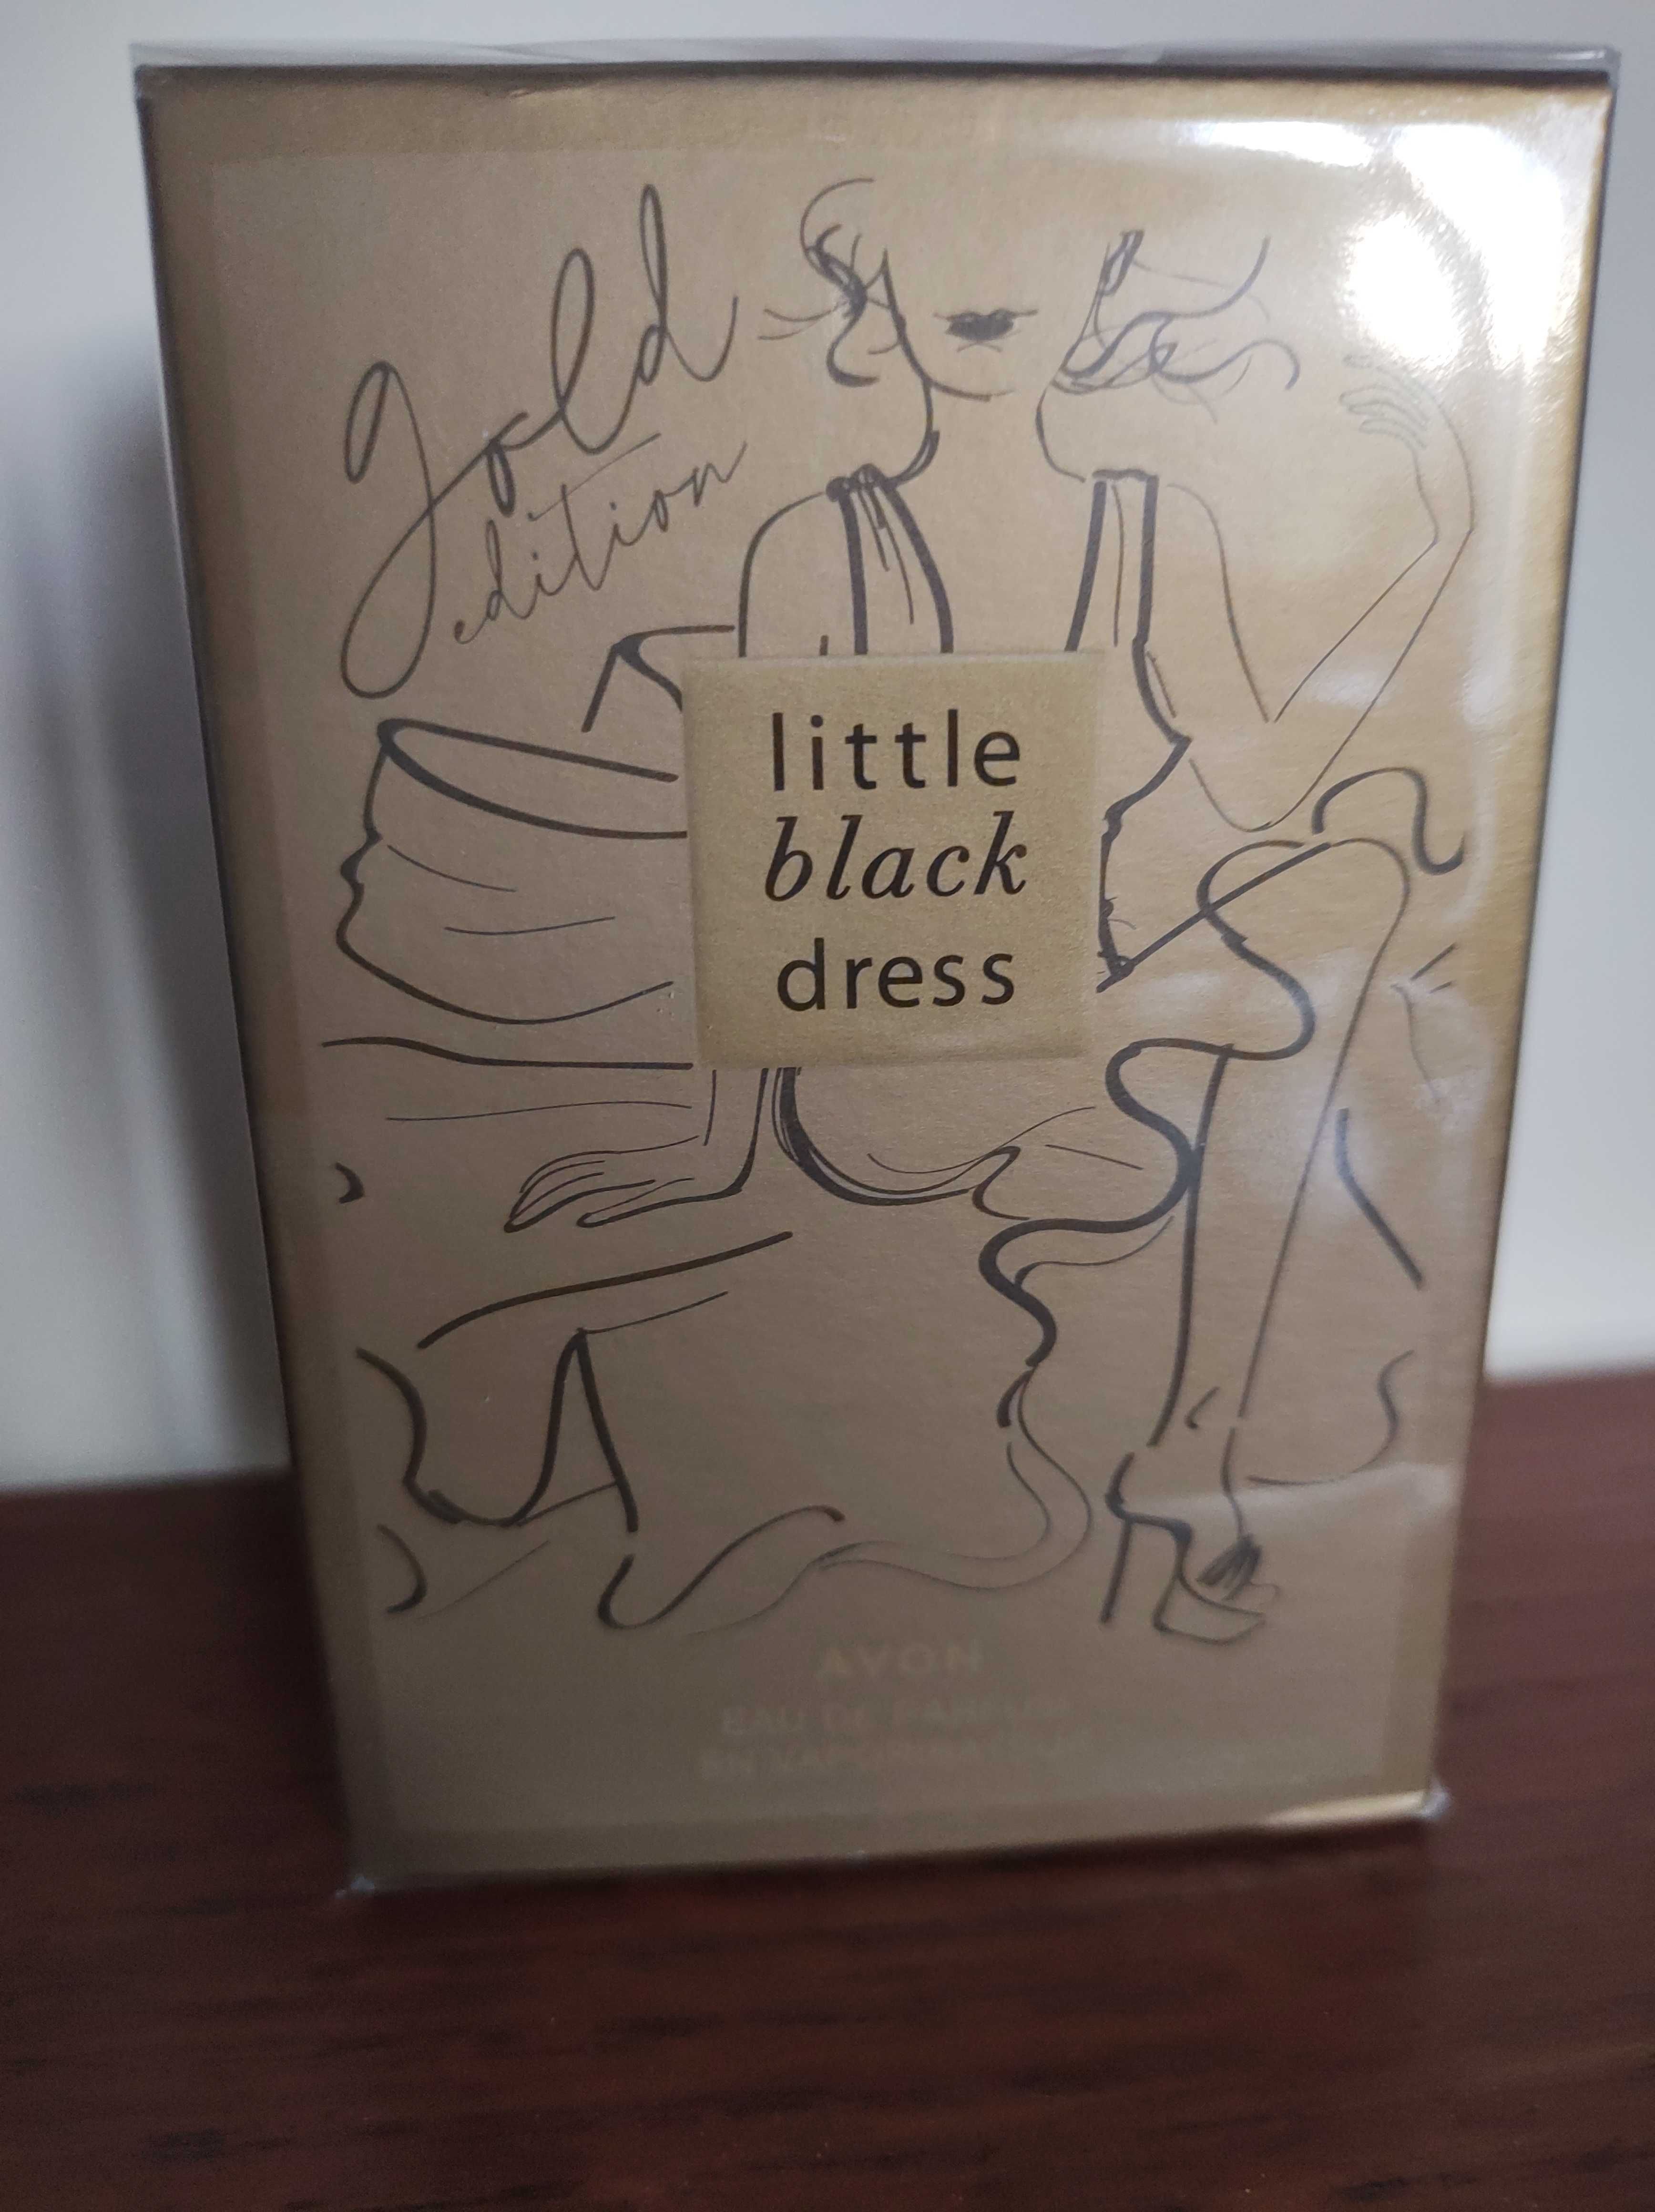 Woda perfumowana Avon Little Black Dress